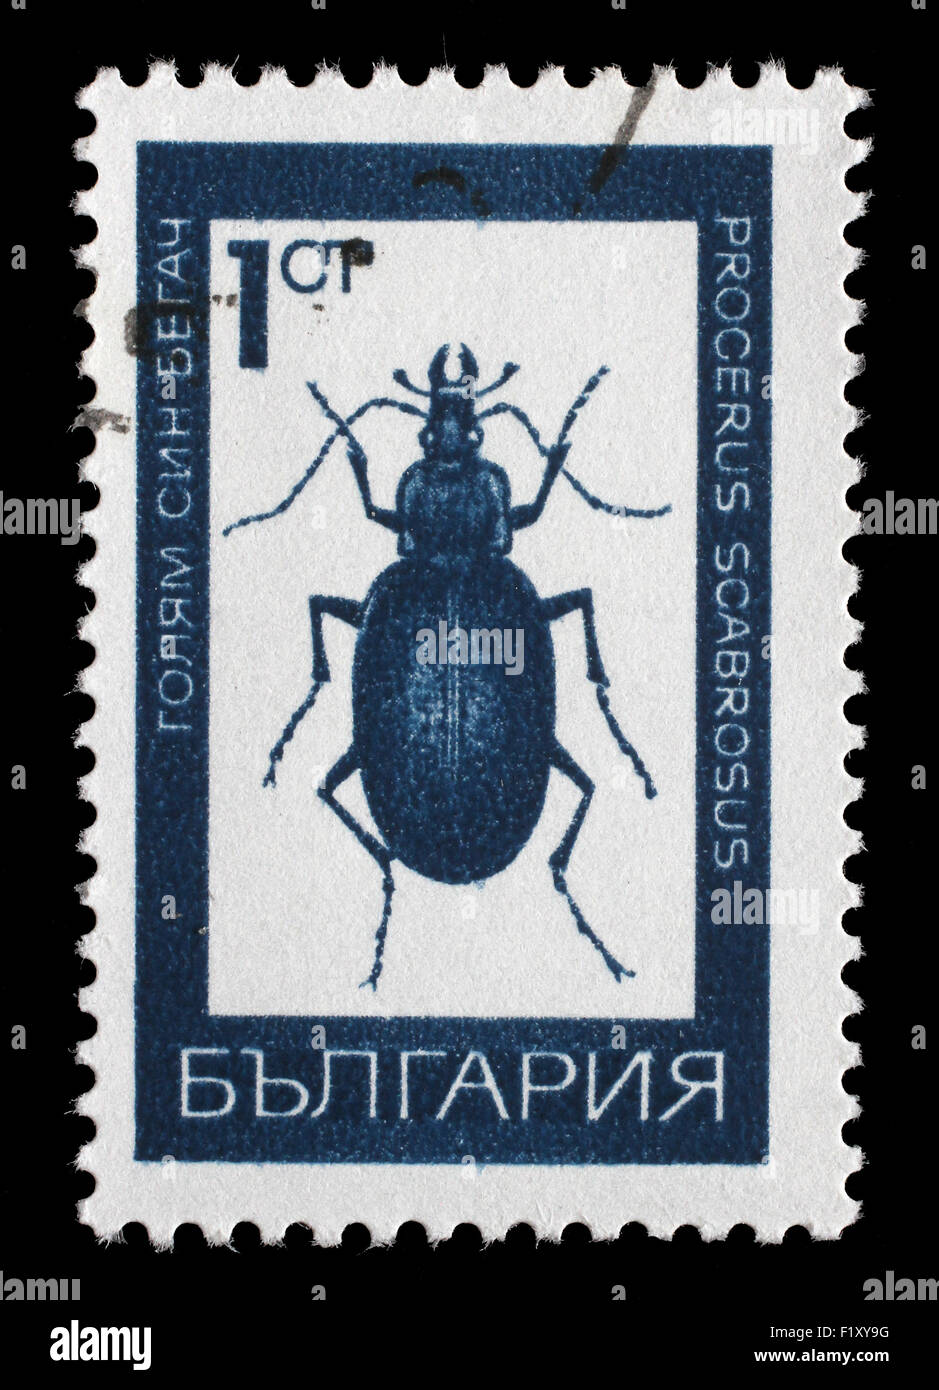 Stamp printed in Bulgaria showing beetle circa 1968 Stock Photo